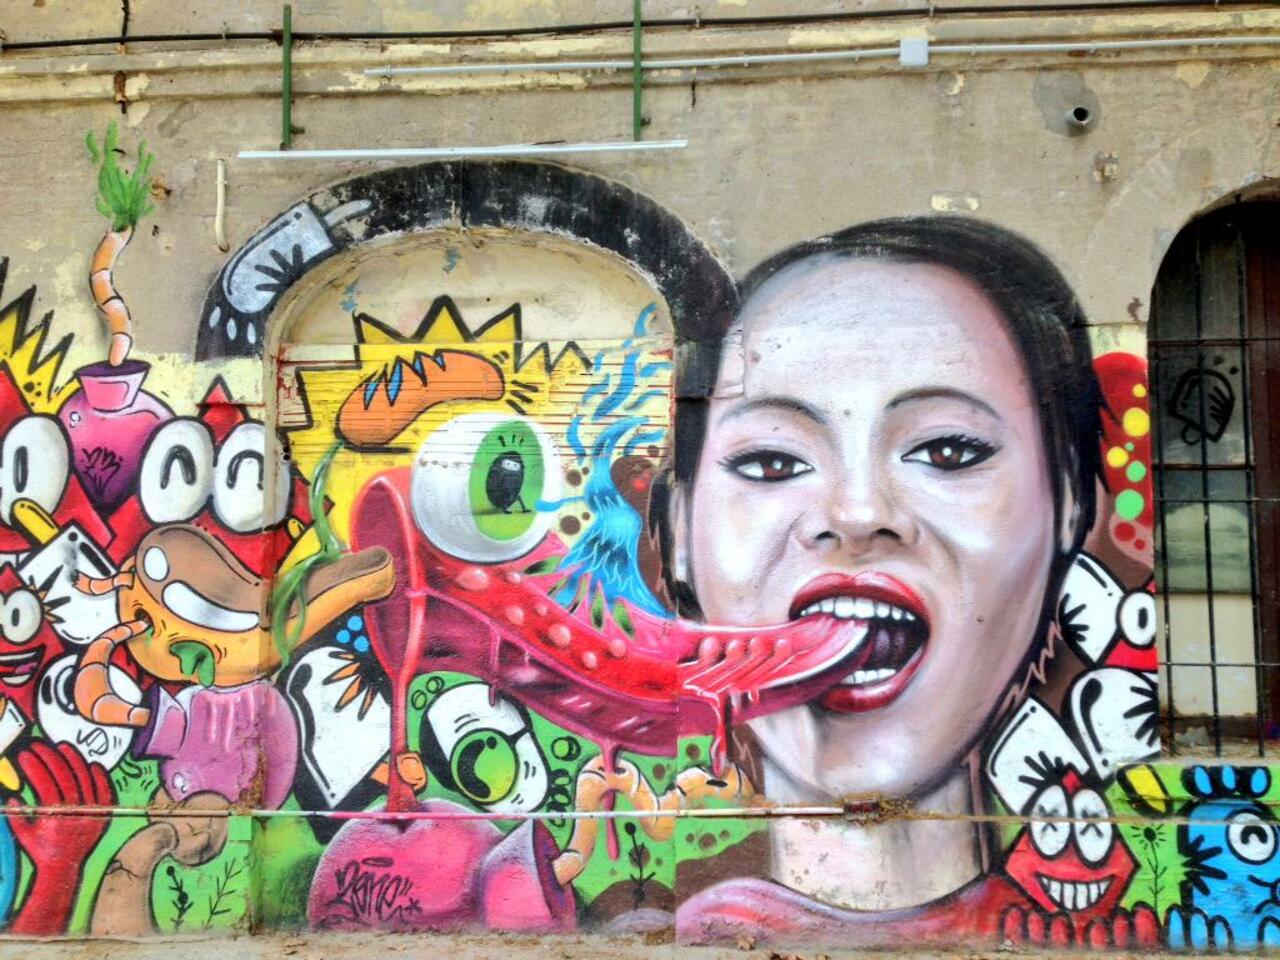 RT @streetartgall: Dope mix of styles in this piece. #graffiti #streetart #mural https://t.co/ibTrqGBefU